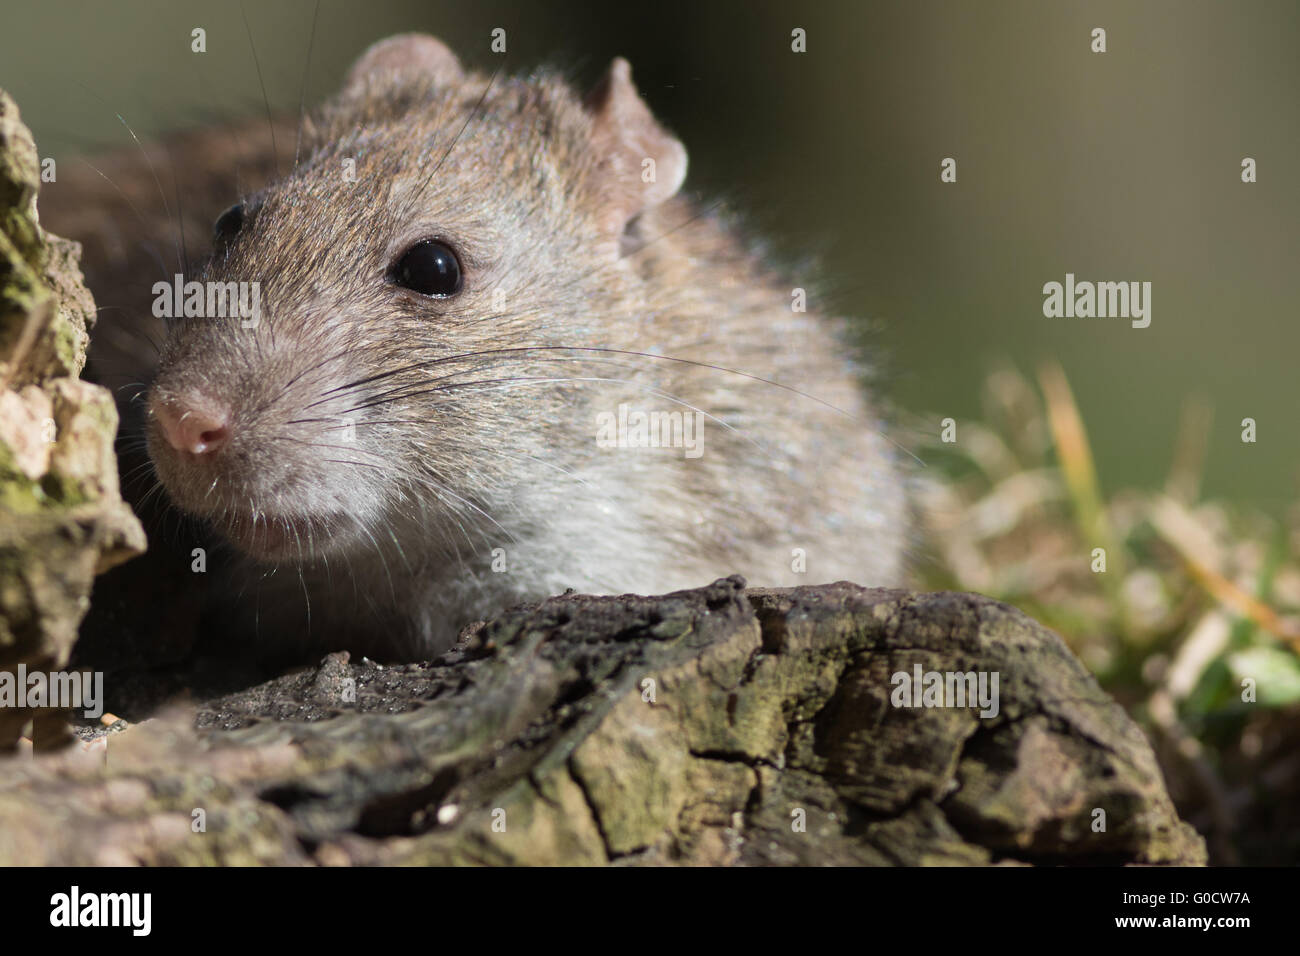 Rat foraging Stock Photo